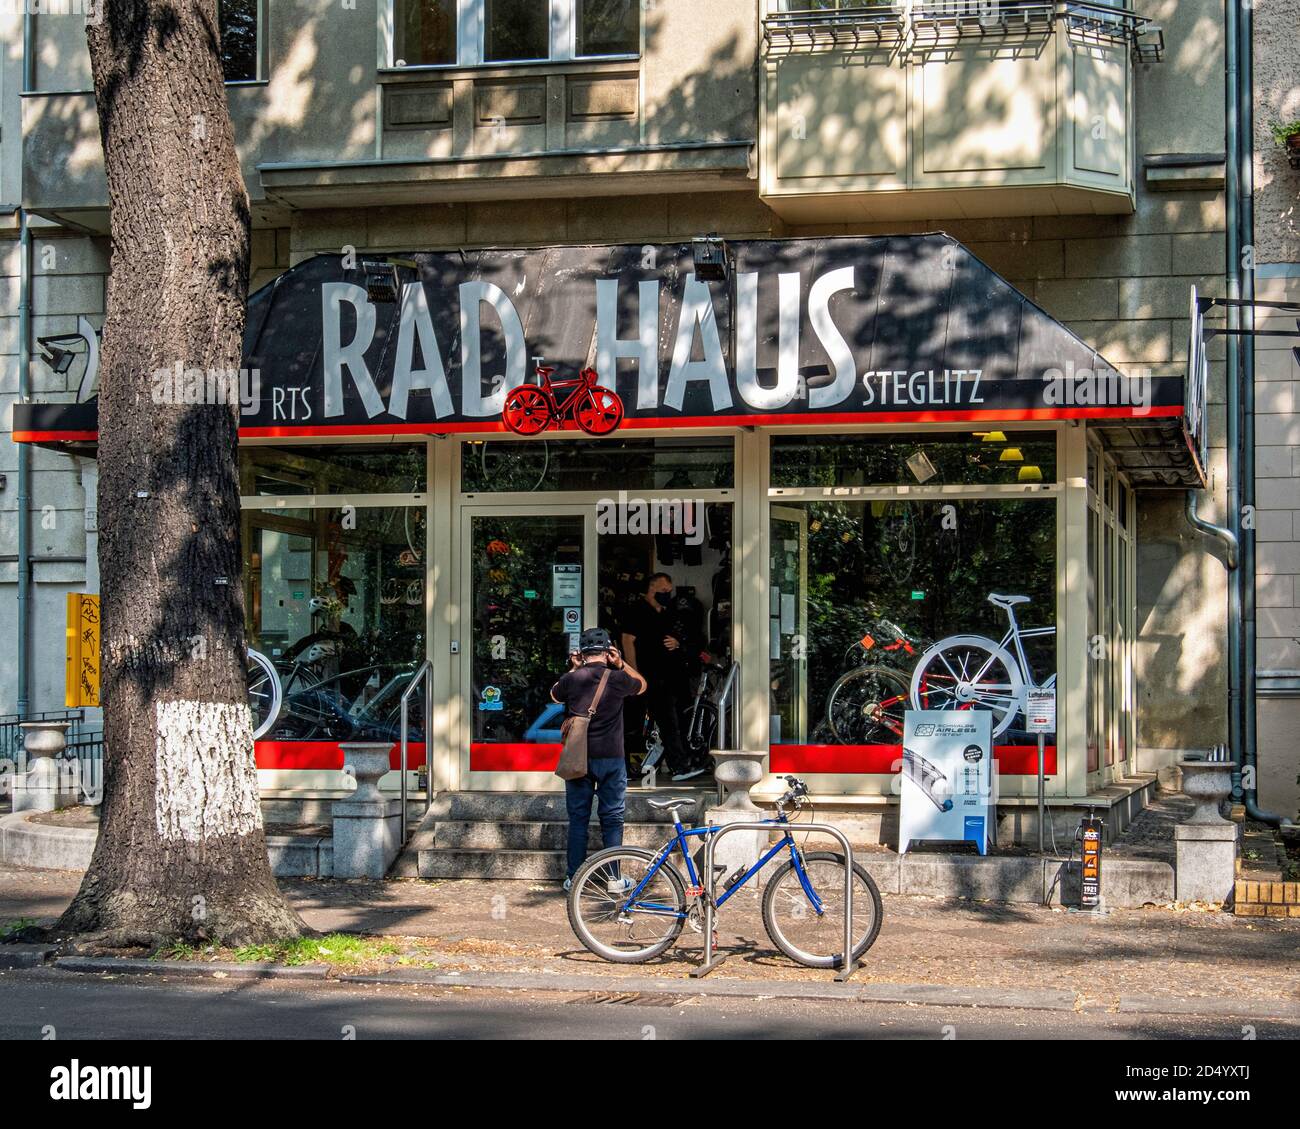 RTS RAD HAUS Steglitz-Grunewaldstraße 6,Berlin Germany. Exterior of Shop selling bicycles Stock Photo